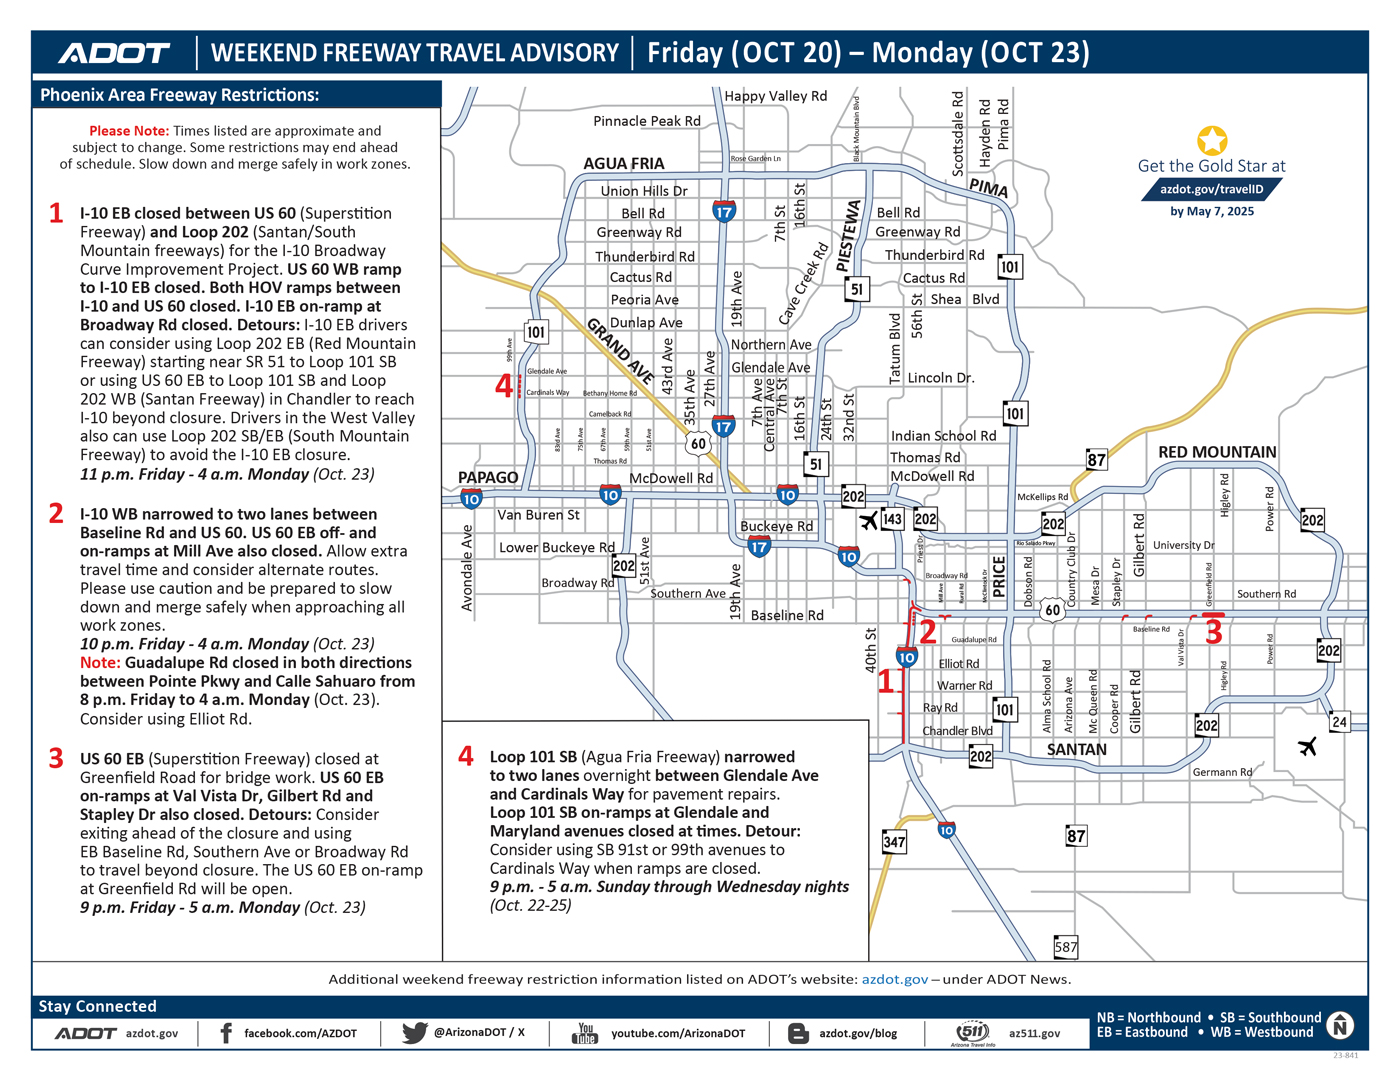 ADOT's Weekend Freeway Travel Advisory Map (Oct. 20-23, '23) - Phoenix Area